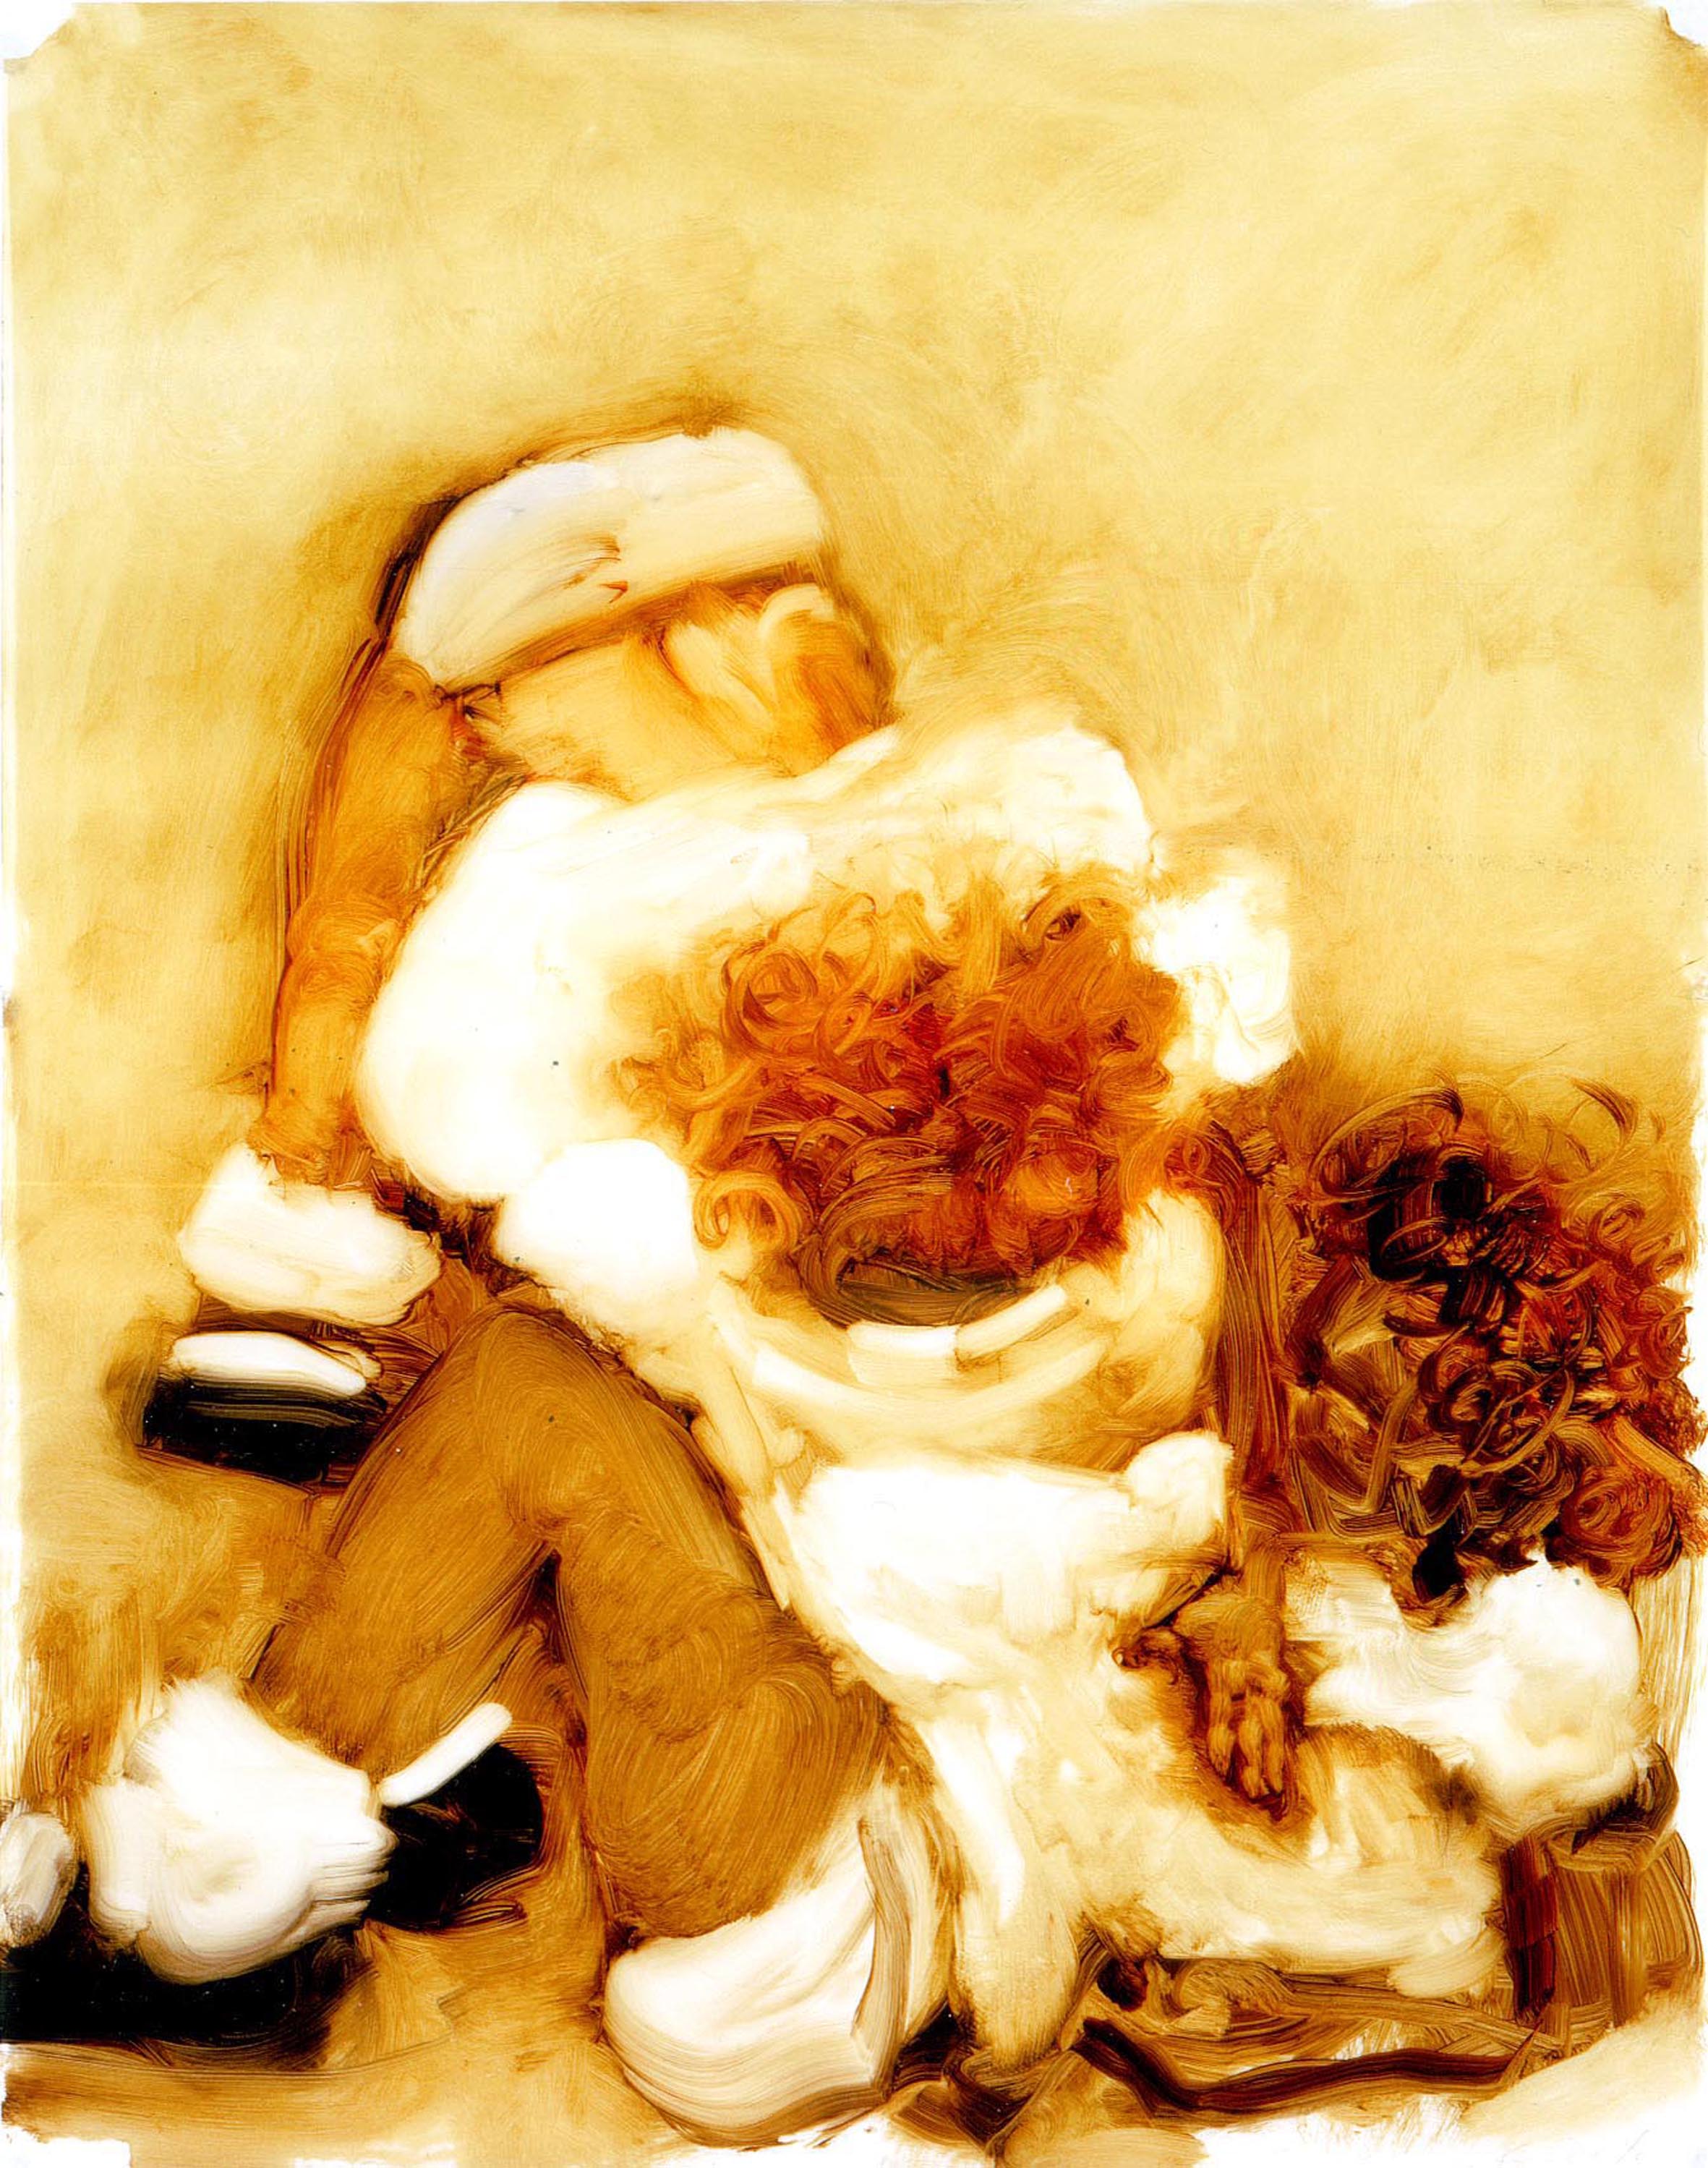 Kim Dingle, Untitled, 2000, cm 61 x 48,3, olio su pergamena